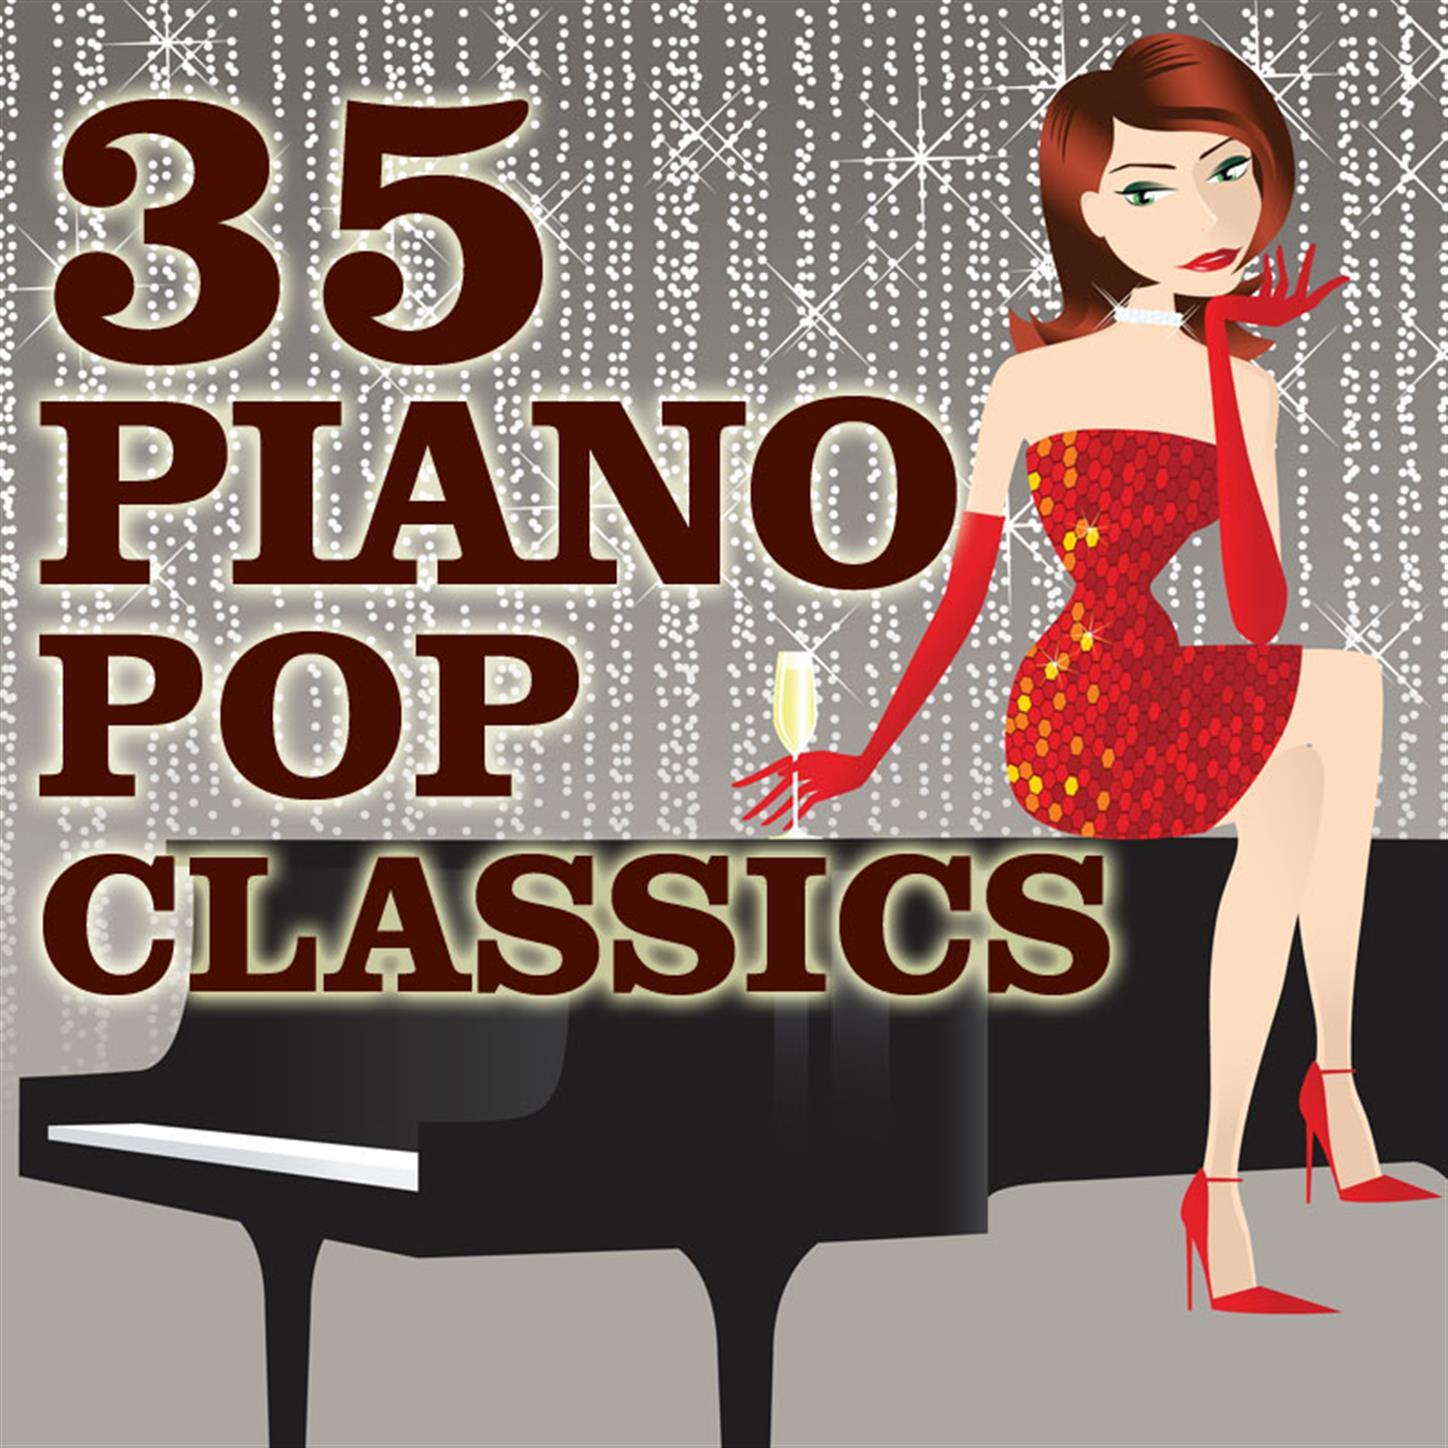 35 Piano Pop Classics专辑